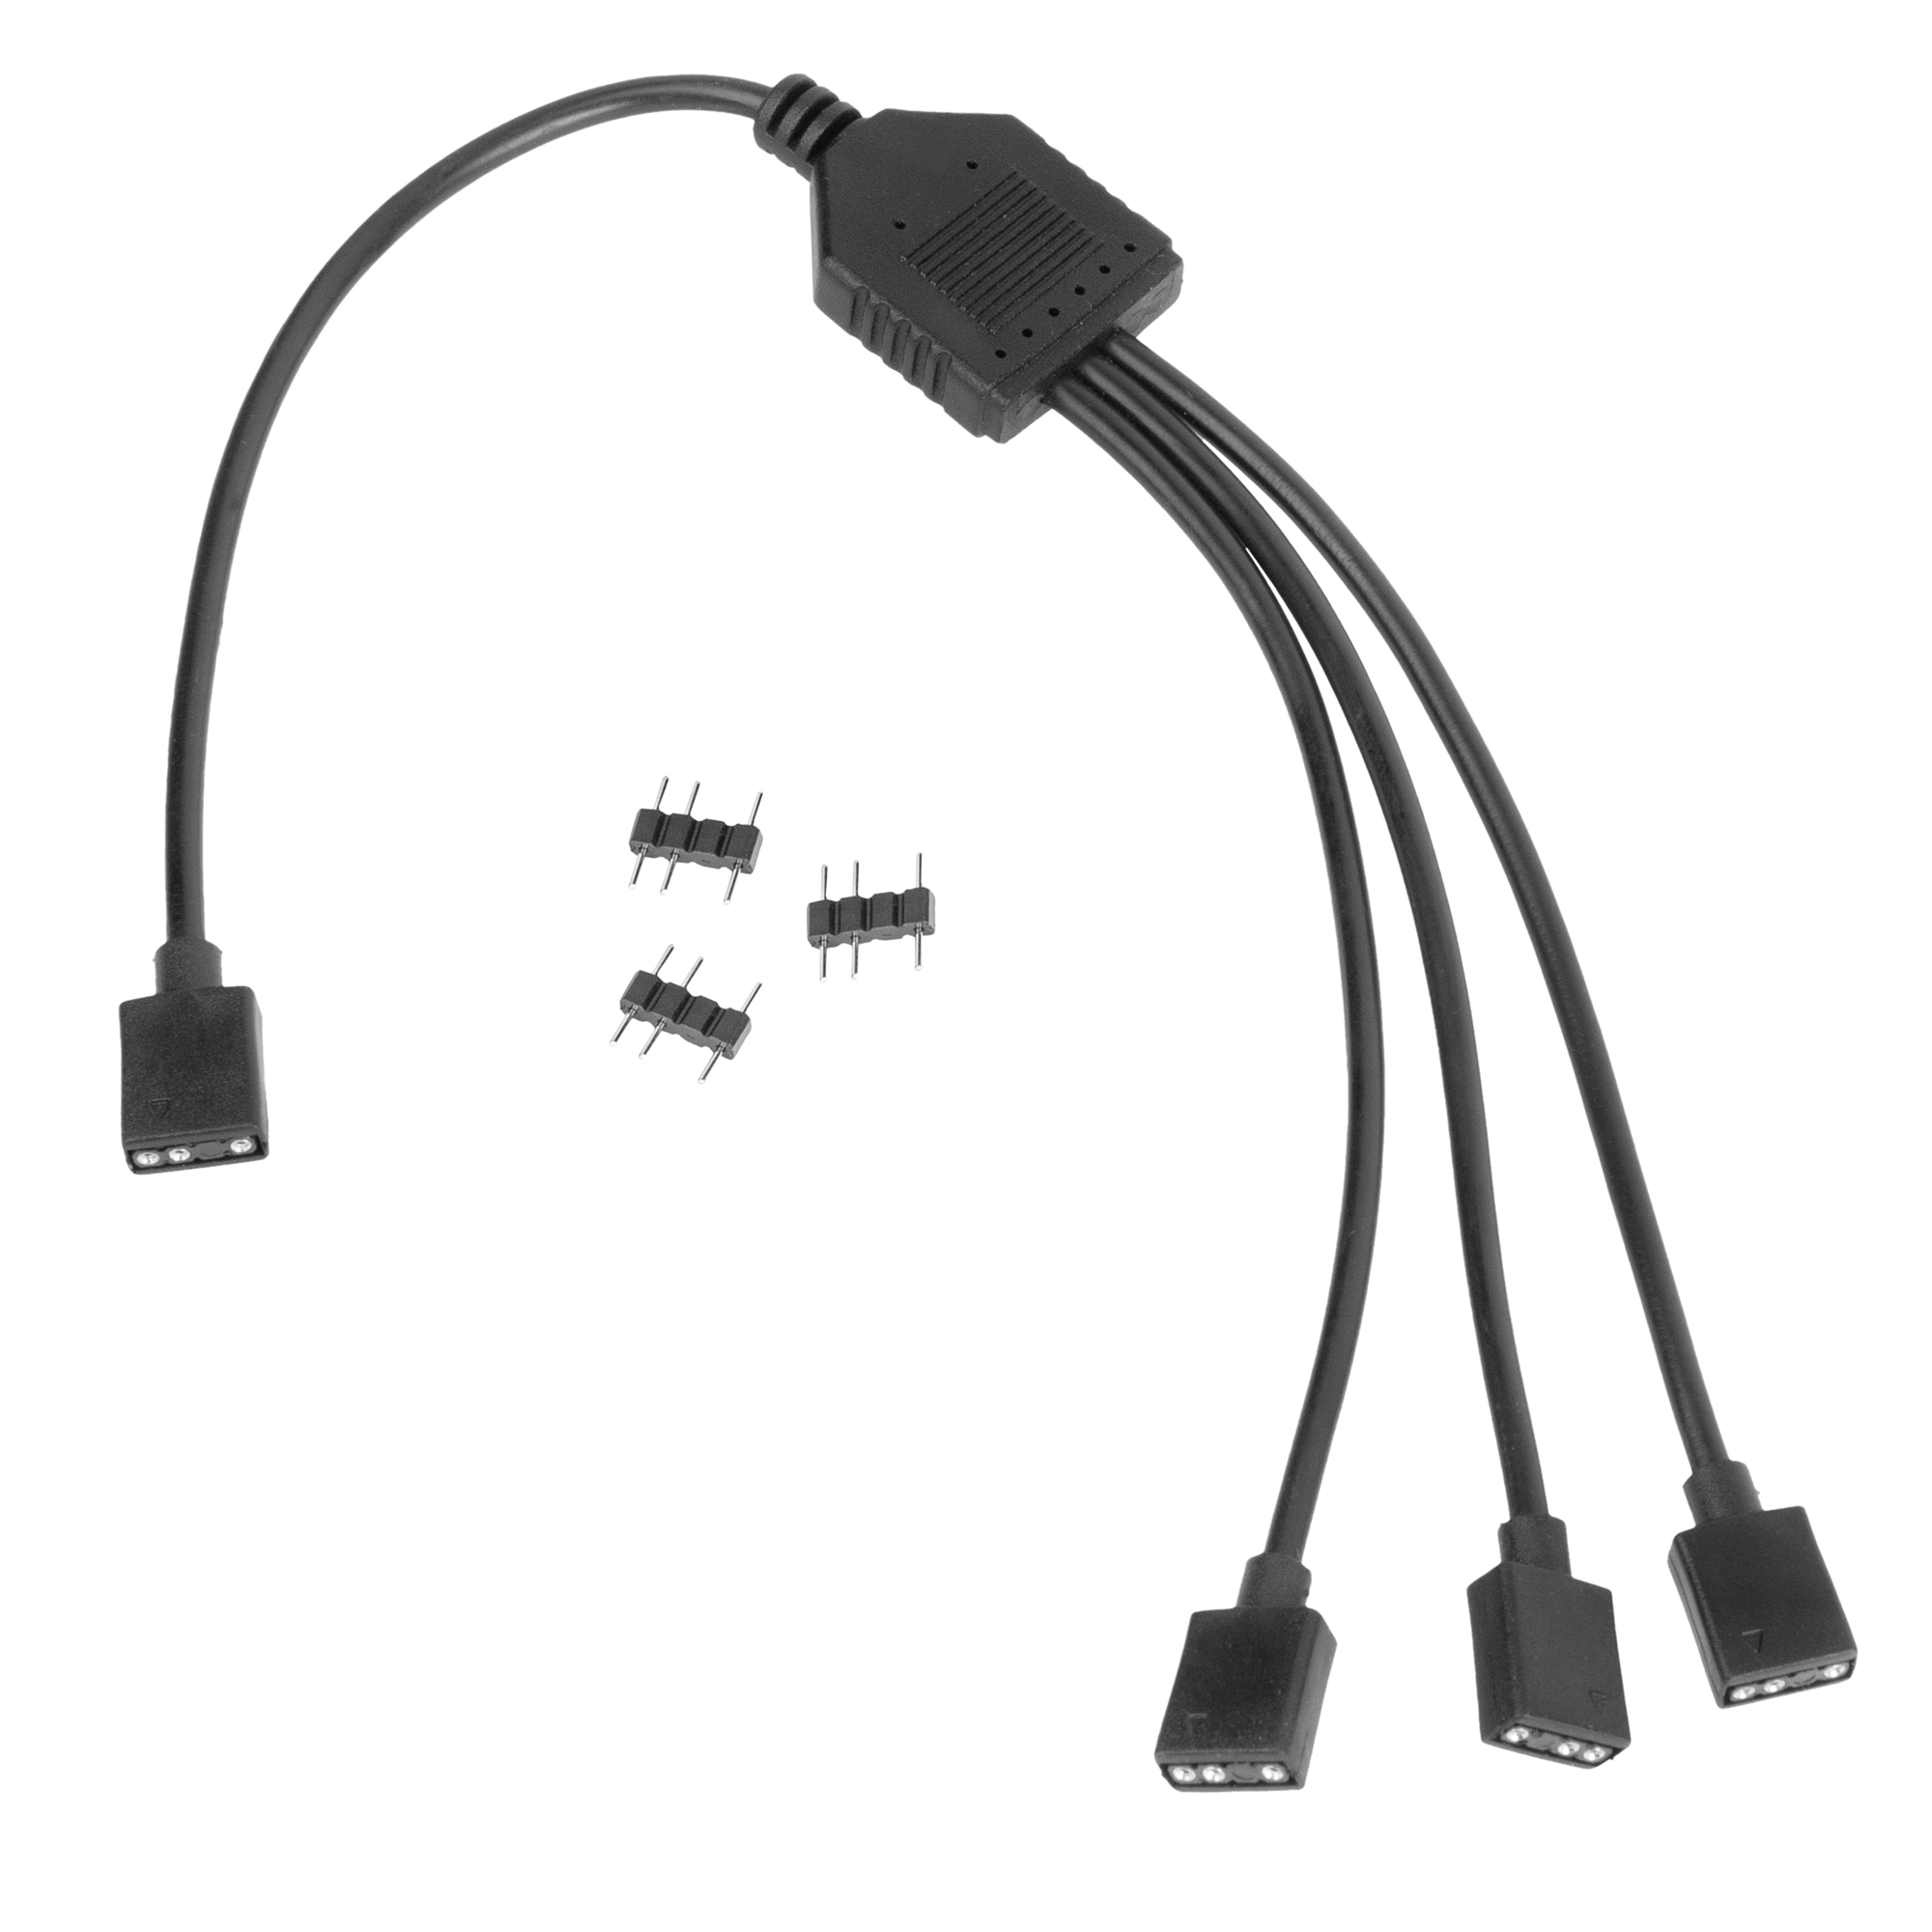 Kolink - Kolink ARGB 1-3 Splitter Cable - 30cm